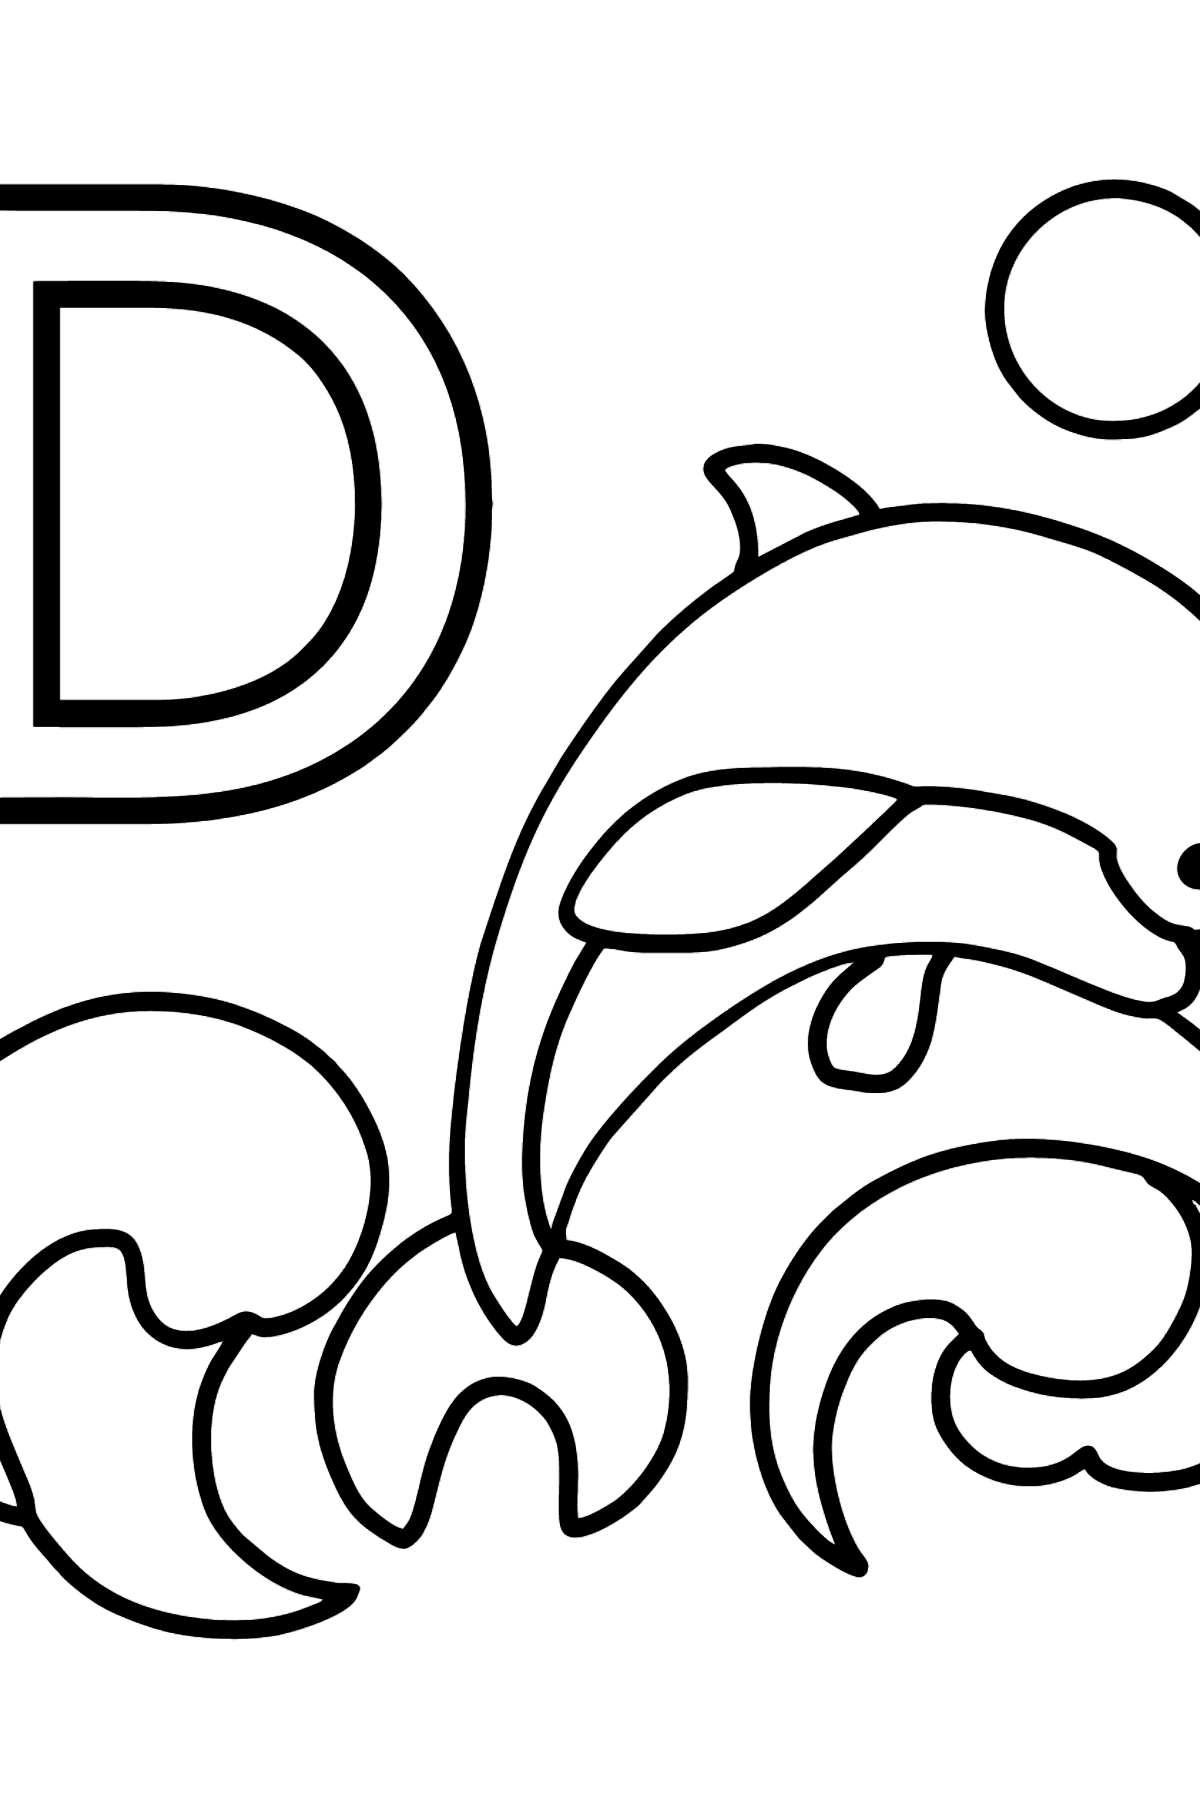 Раскраска Буква D французского алфавита - DAUPHIN - Картинки для Детей